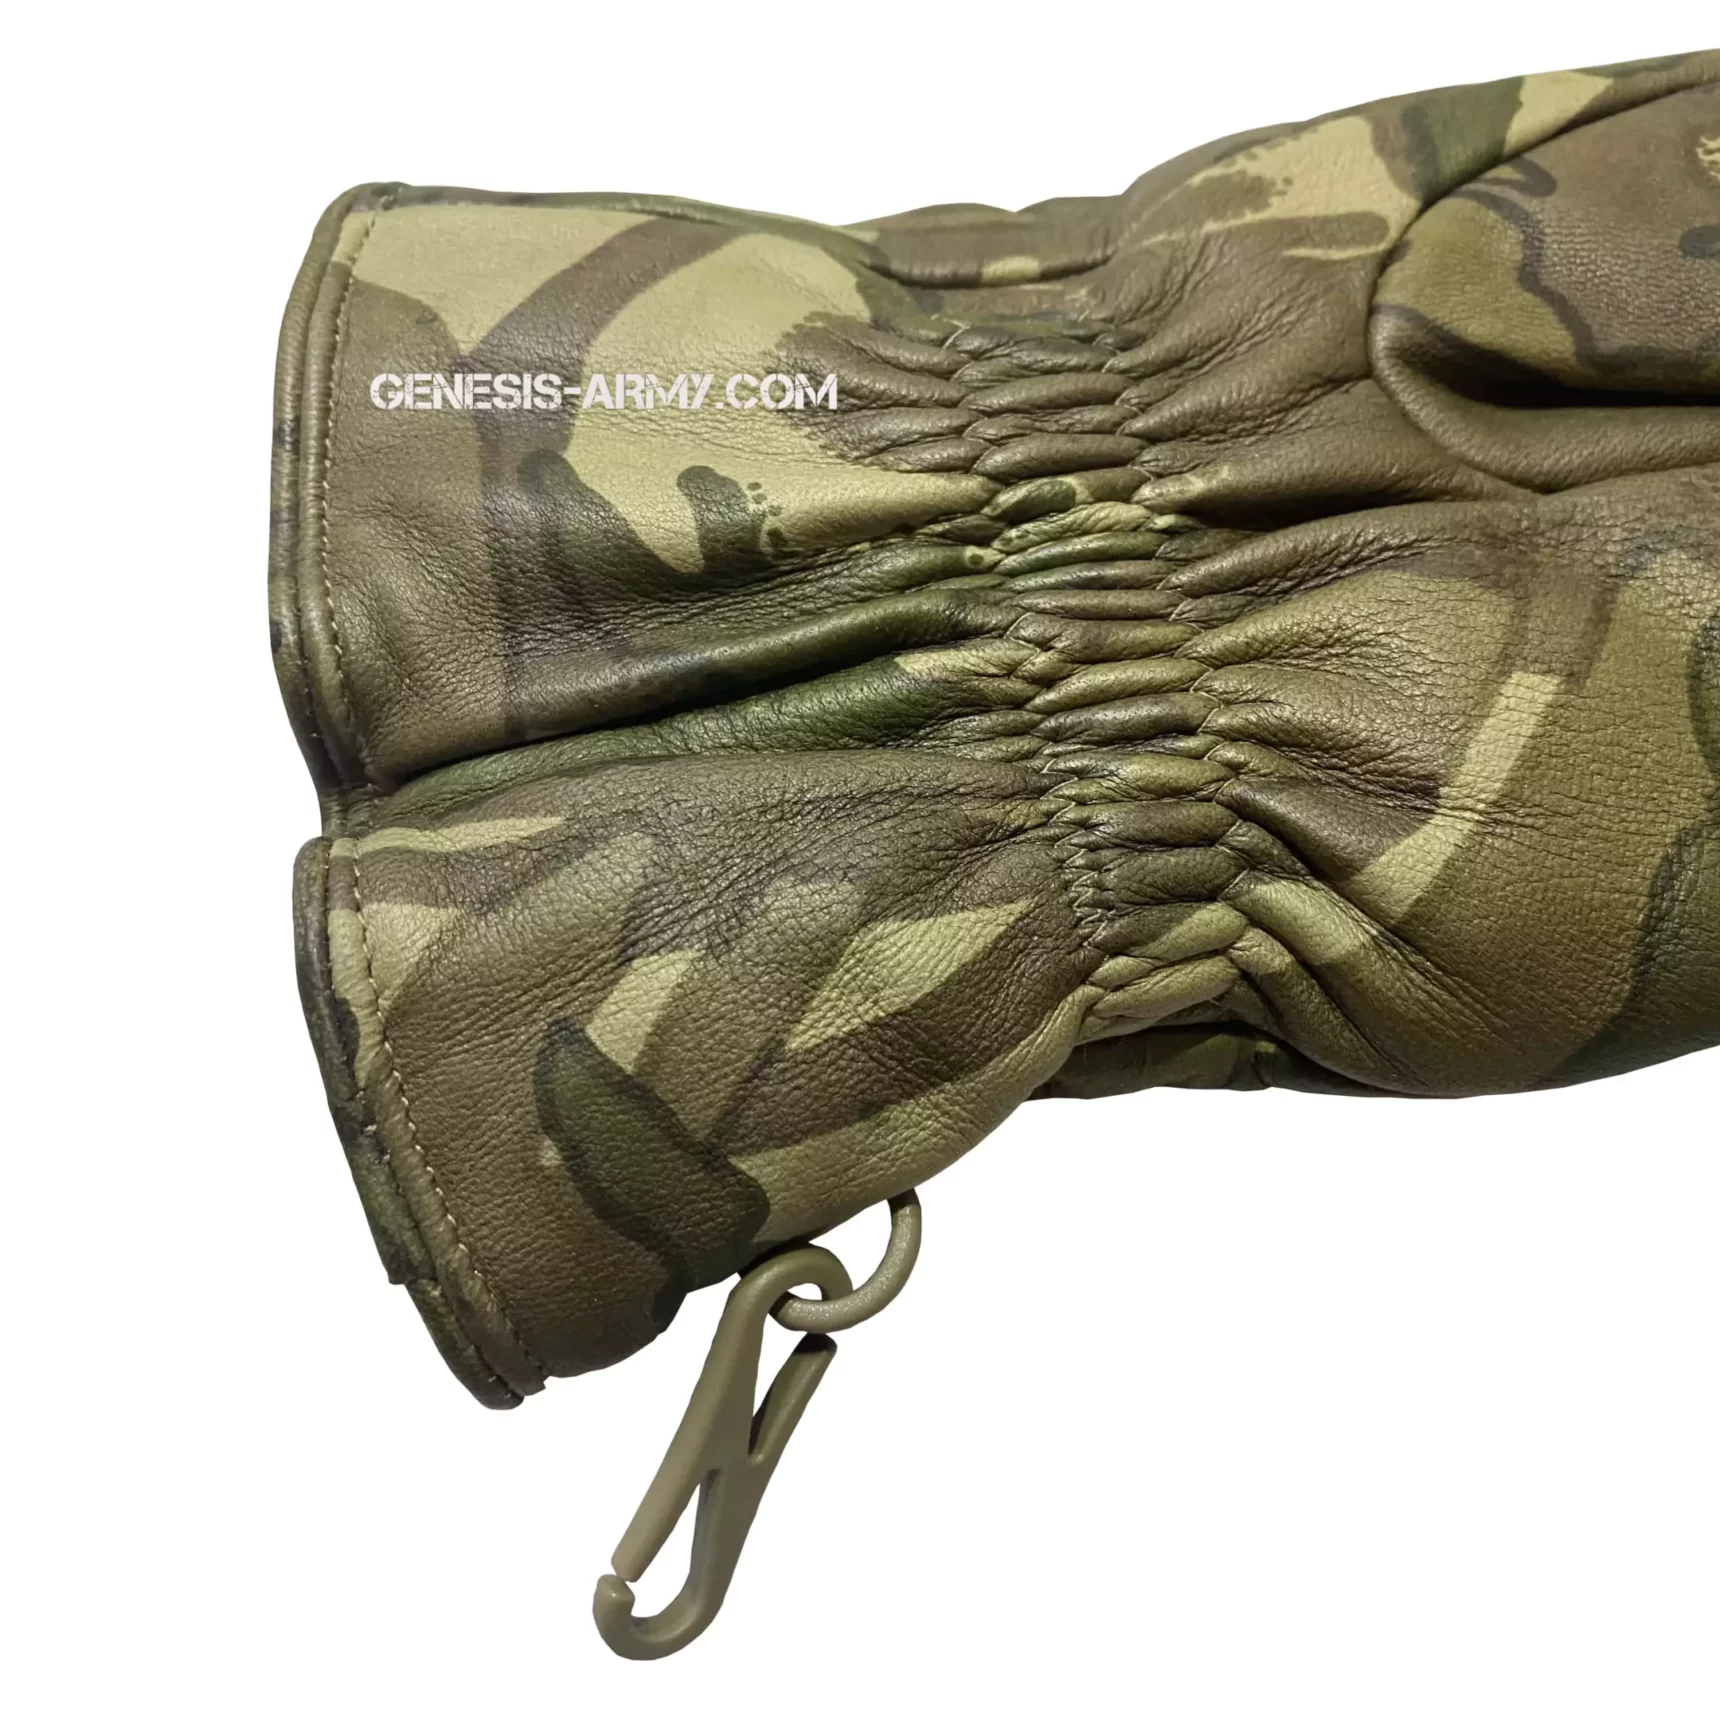 Leather Gloves Combat Cold Weather MTP Рукавиці зимові військові Multicam